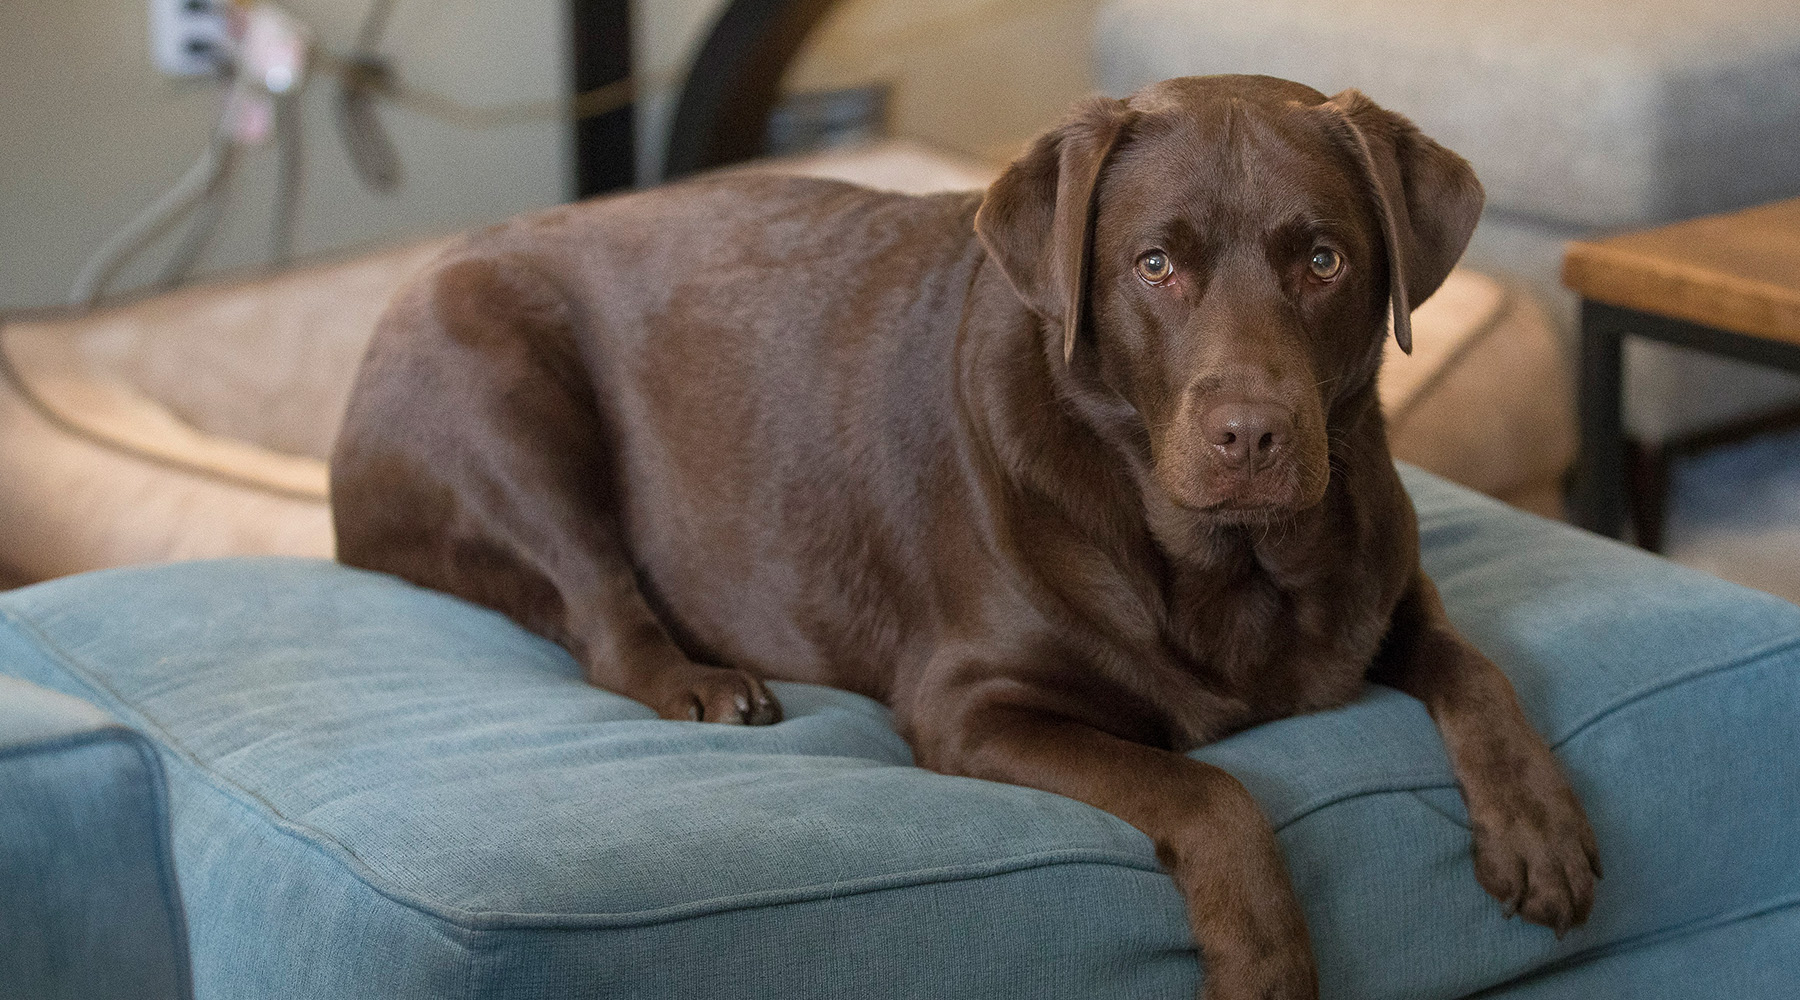 Maeve the Labrador retriever lounges on a footrest